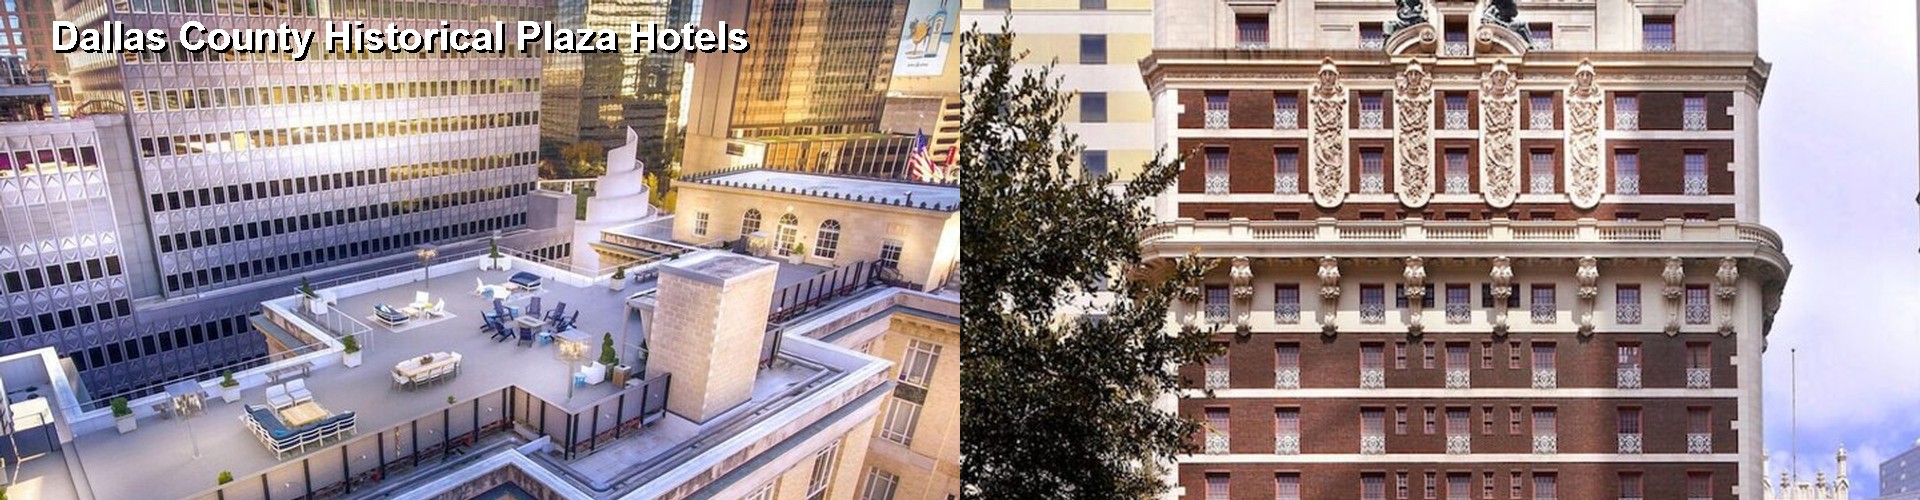 5 Best Hotels near Dallas County Historical Plaza